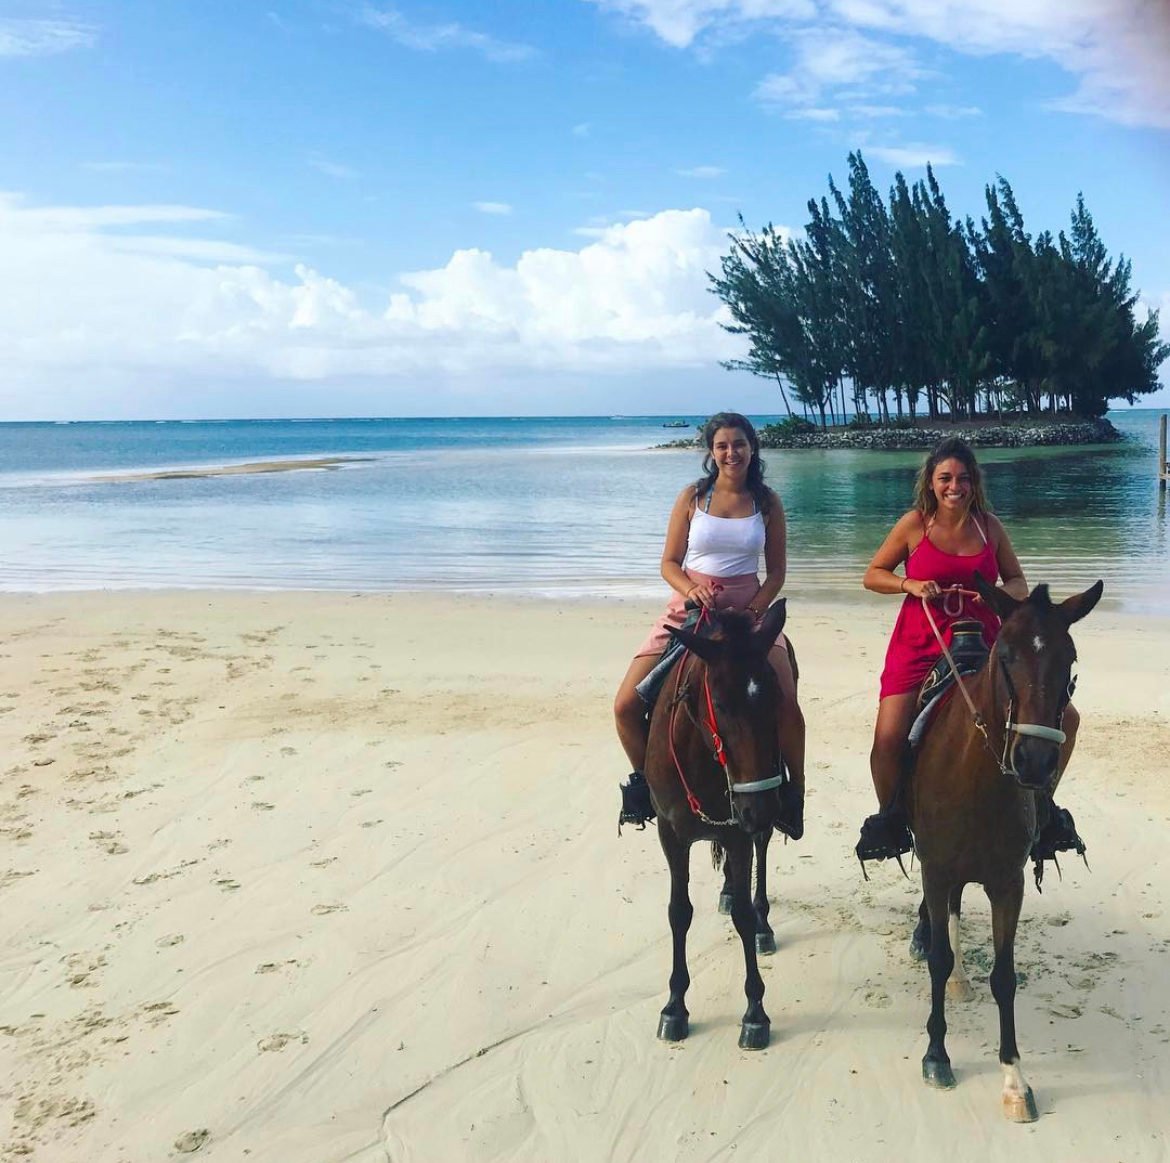 Horseback riding on the beach, best things to do in Roatan, Honduras